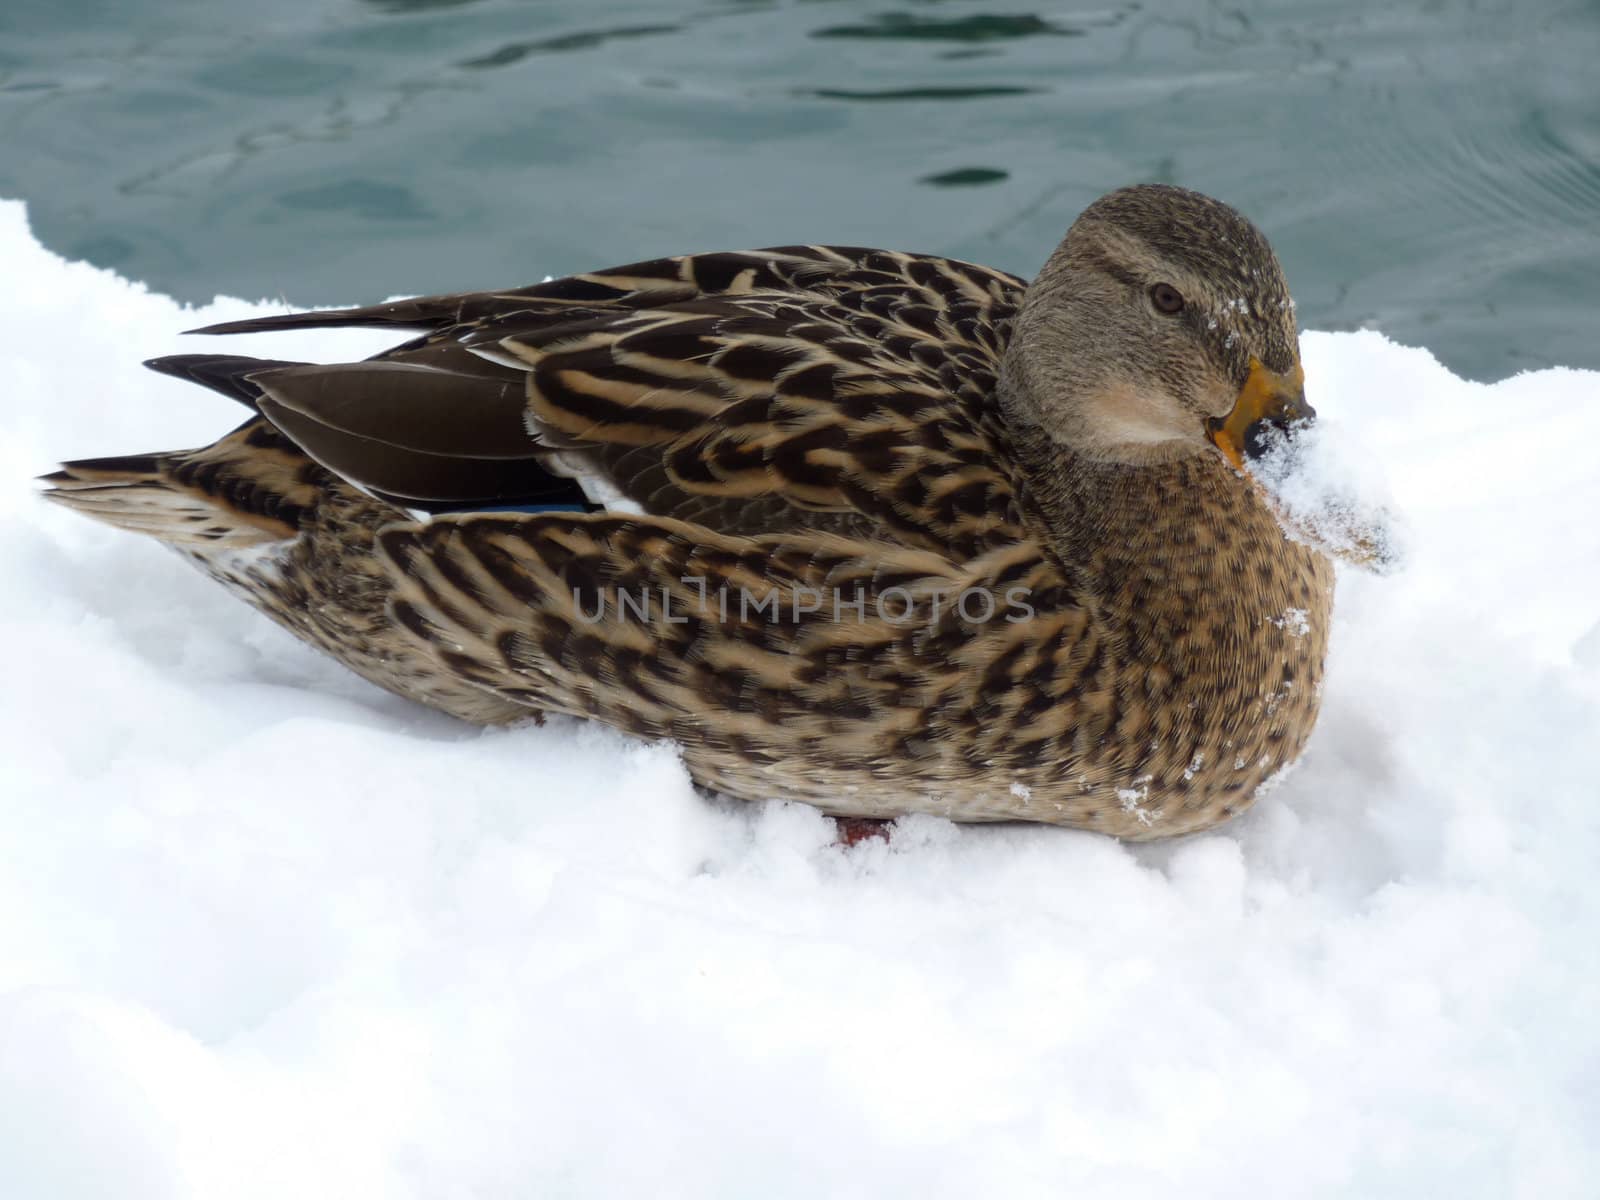 Mallard duck lying on the snow by Elenaphotos21